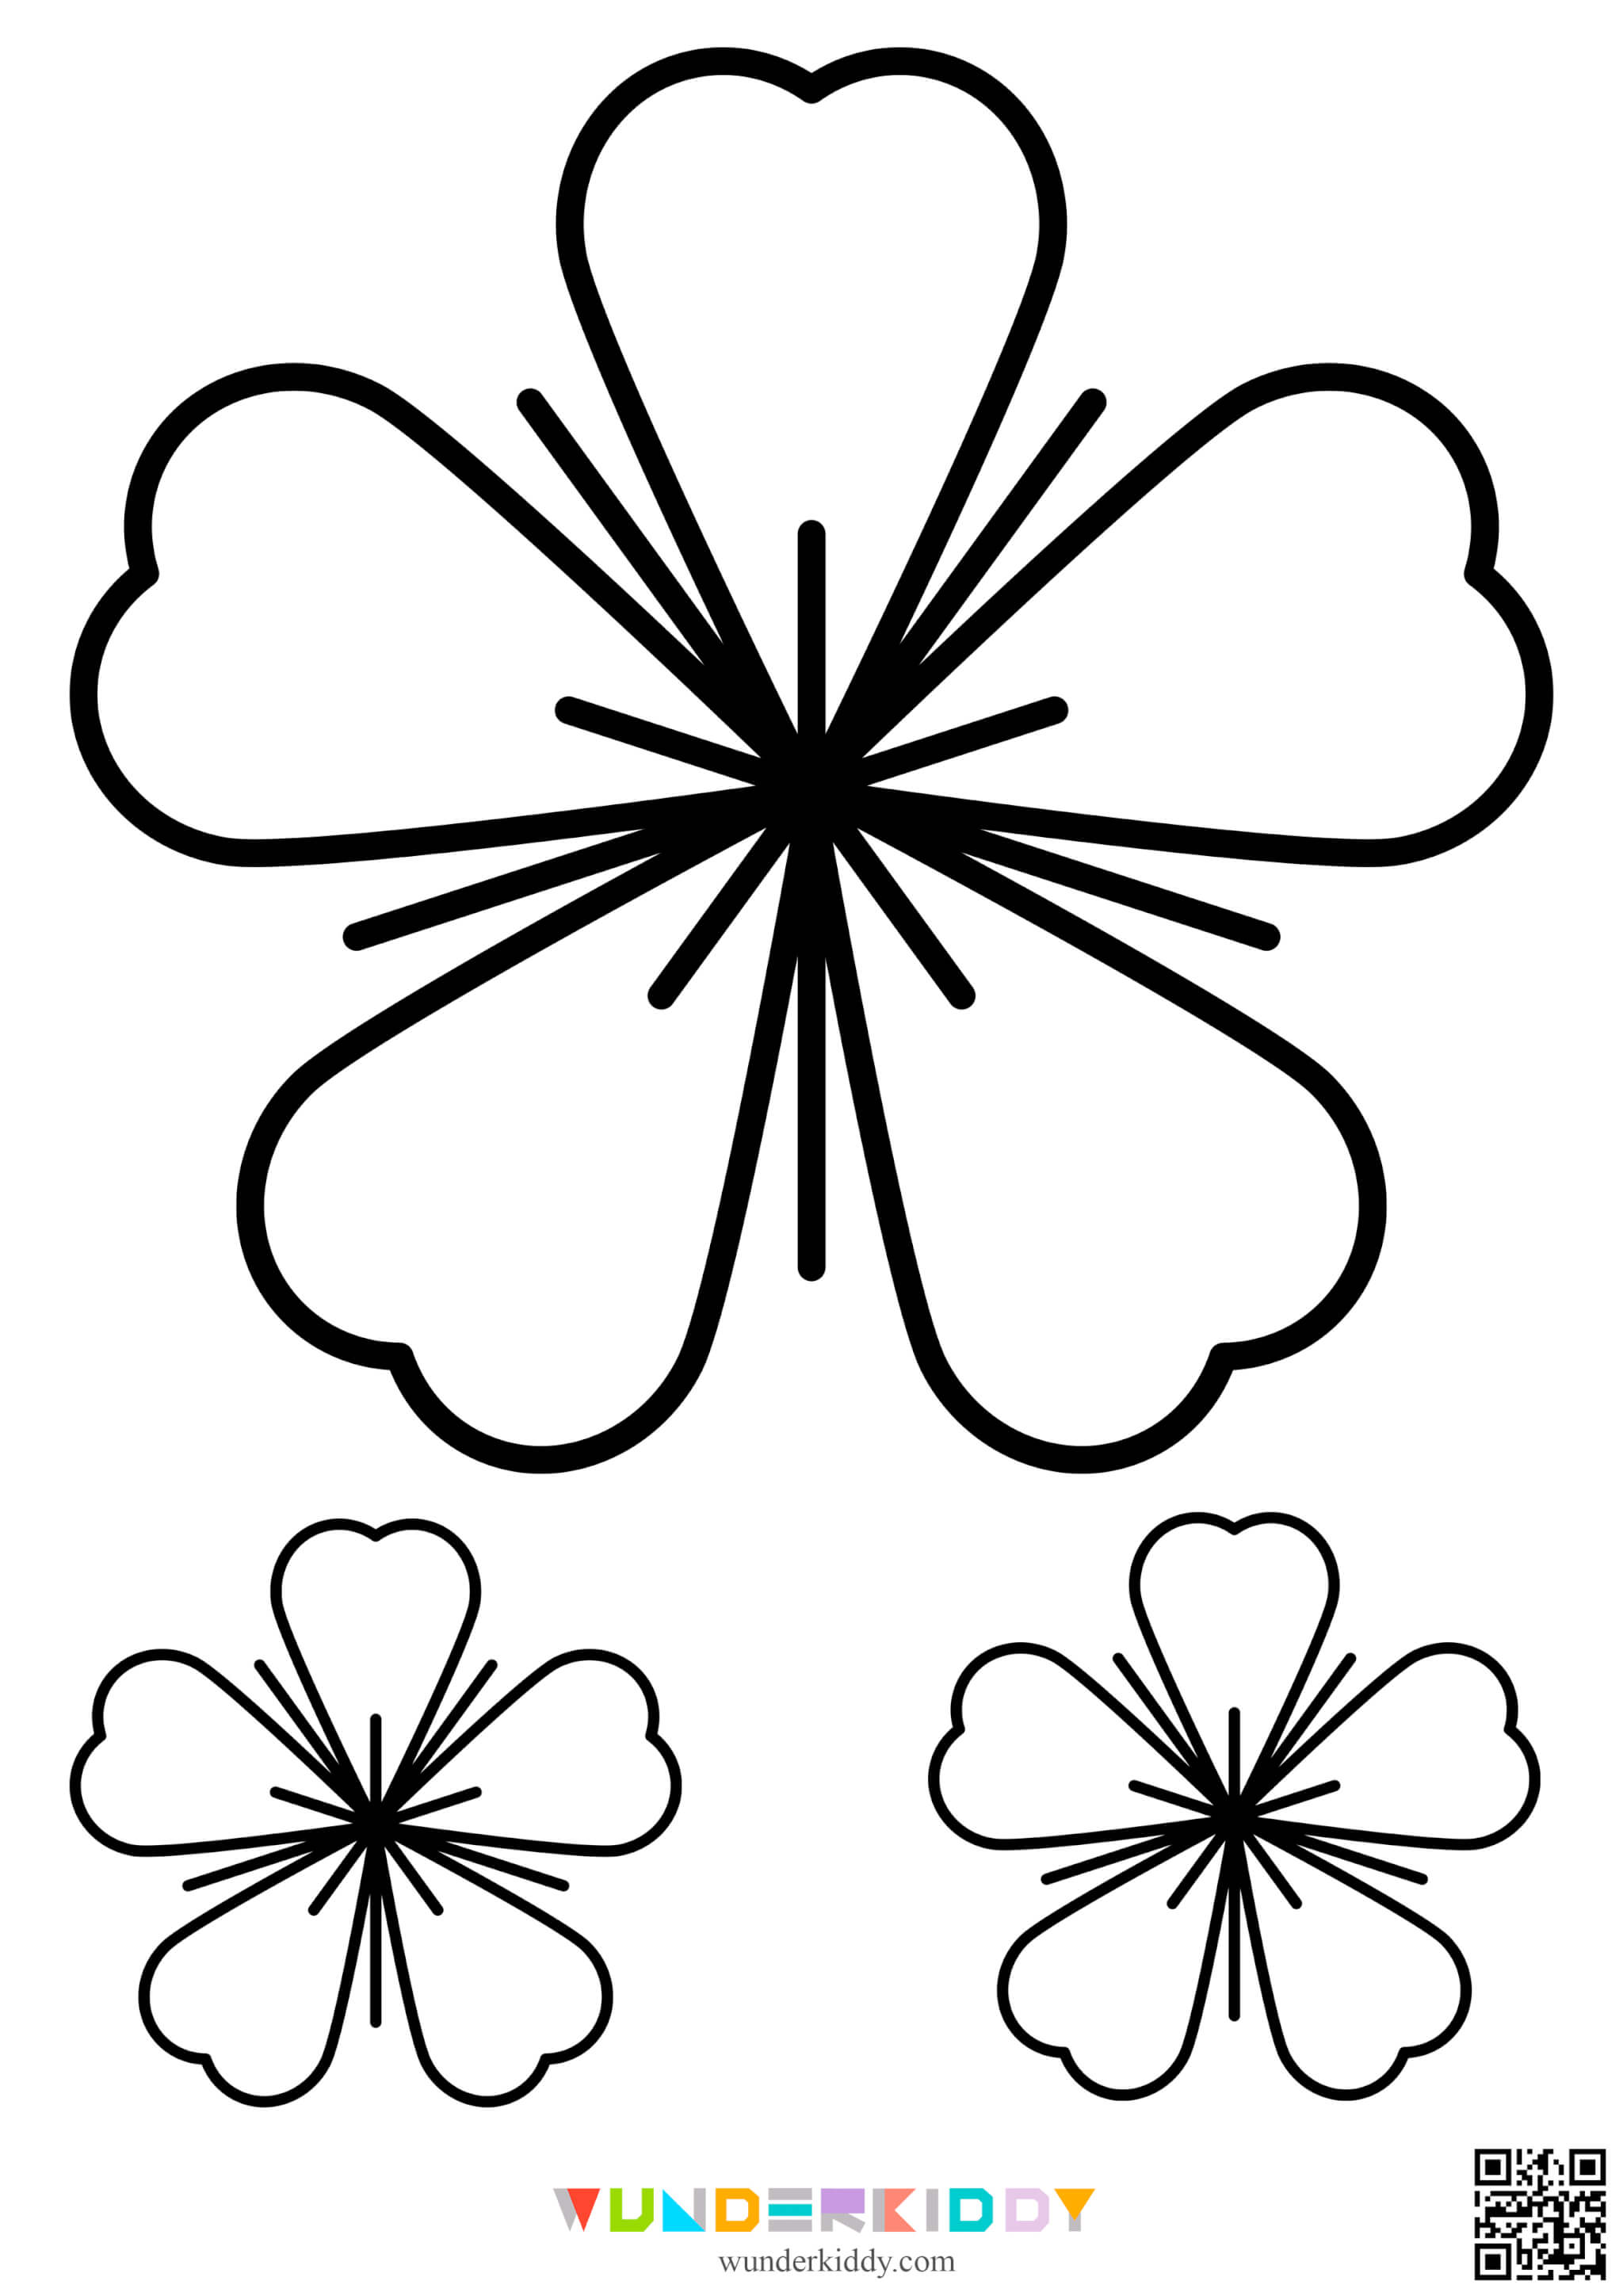 Simple Flower Templates - Image 8